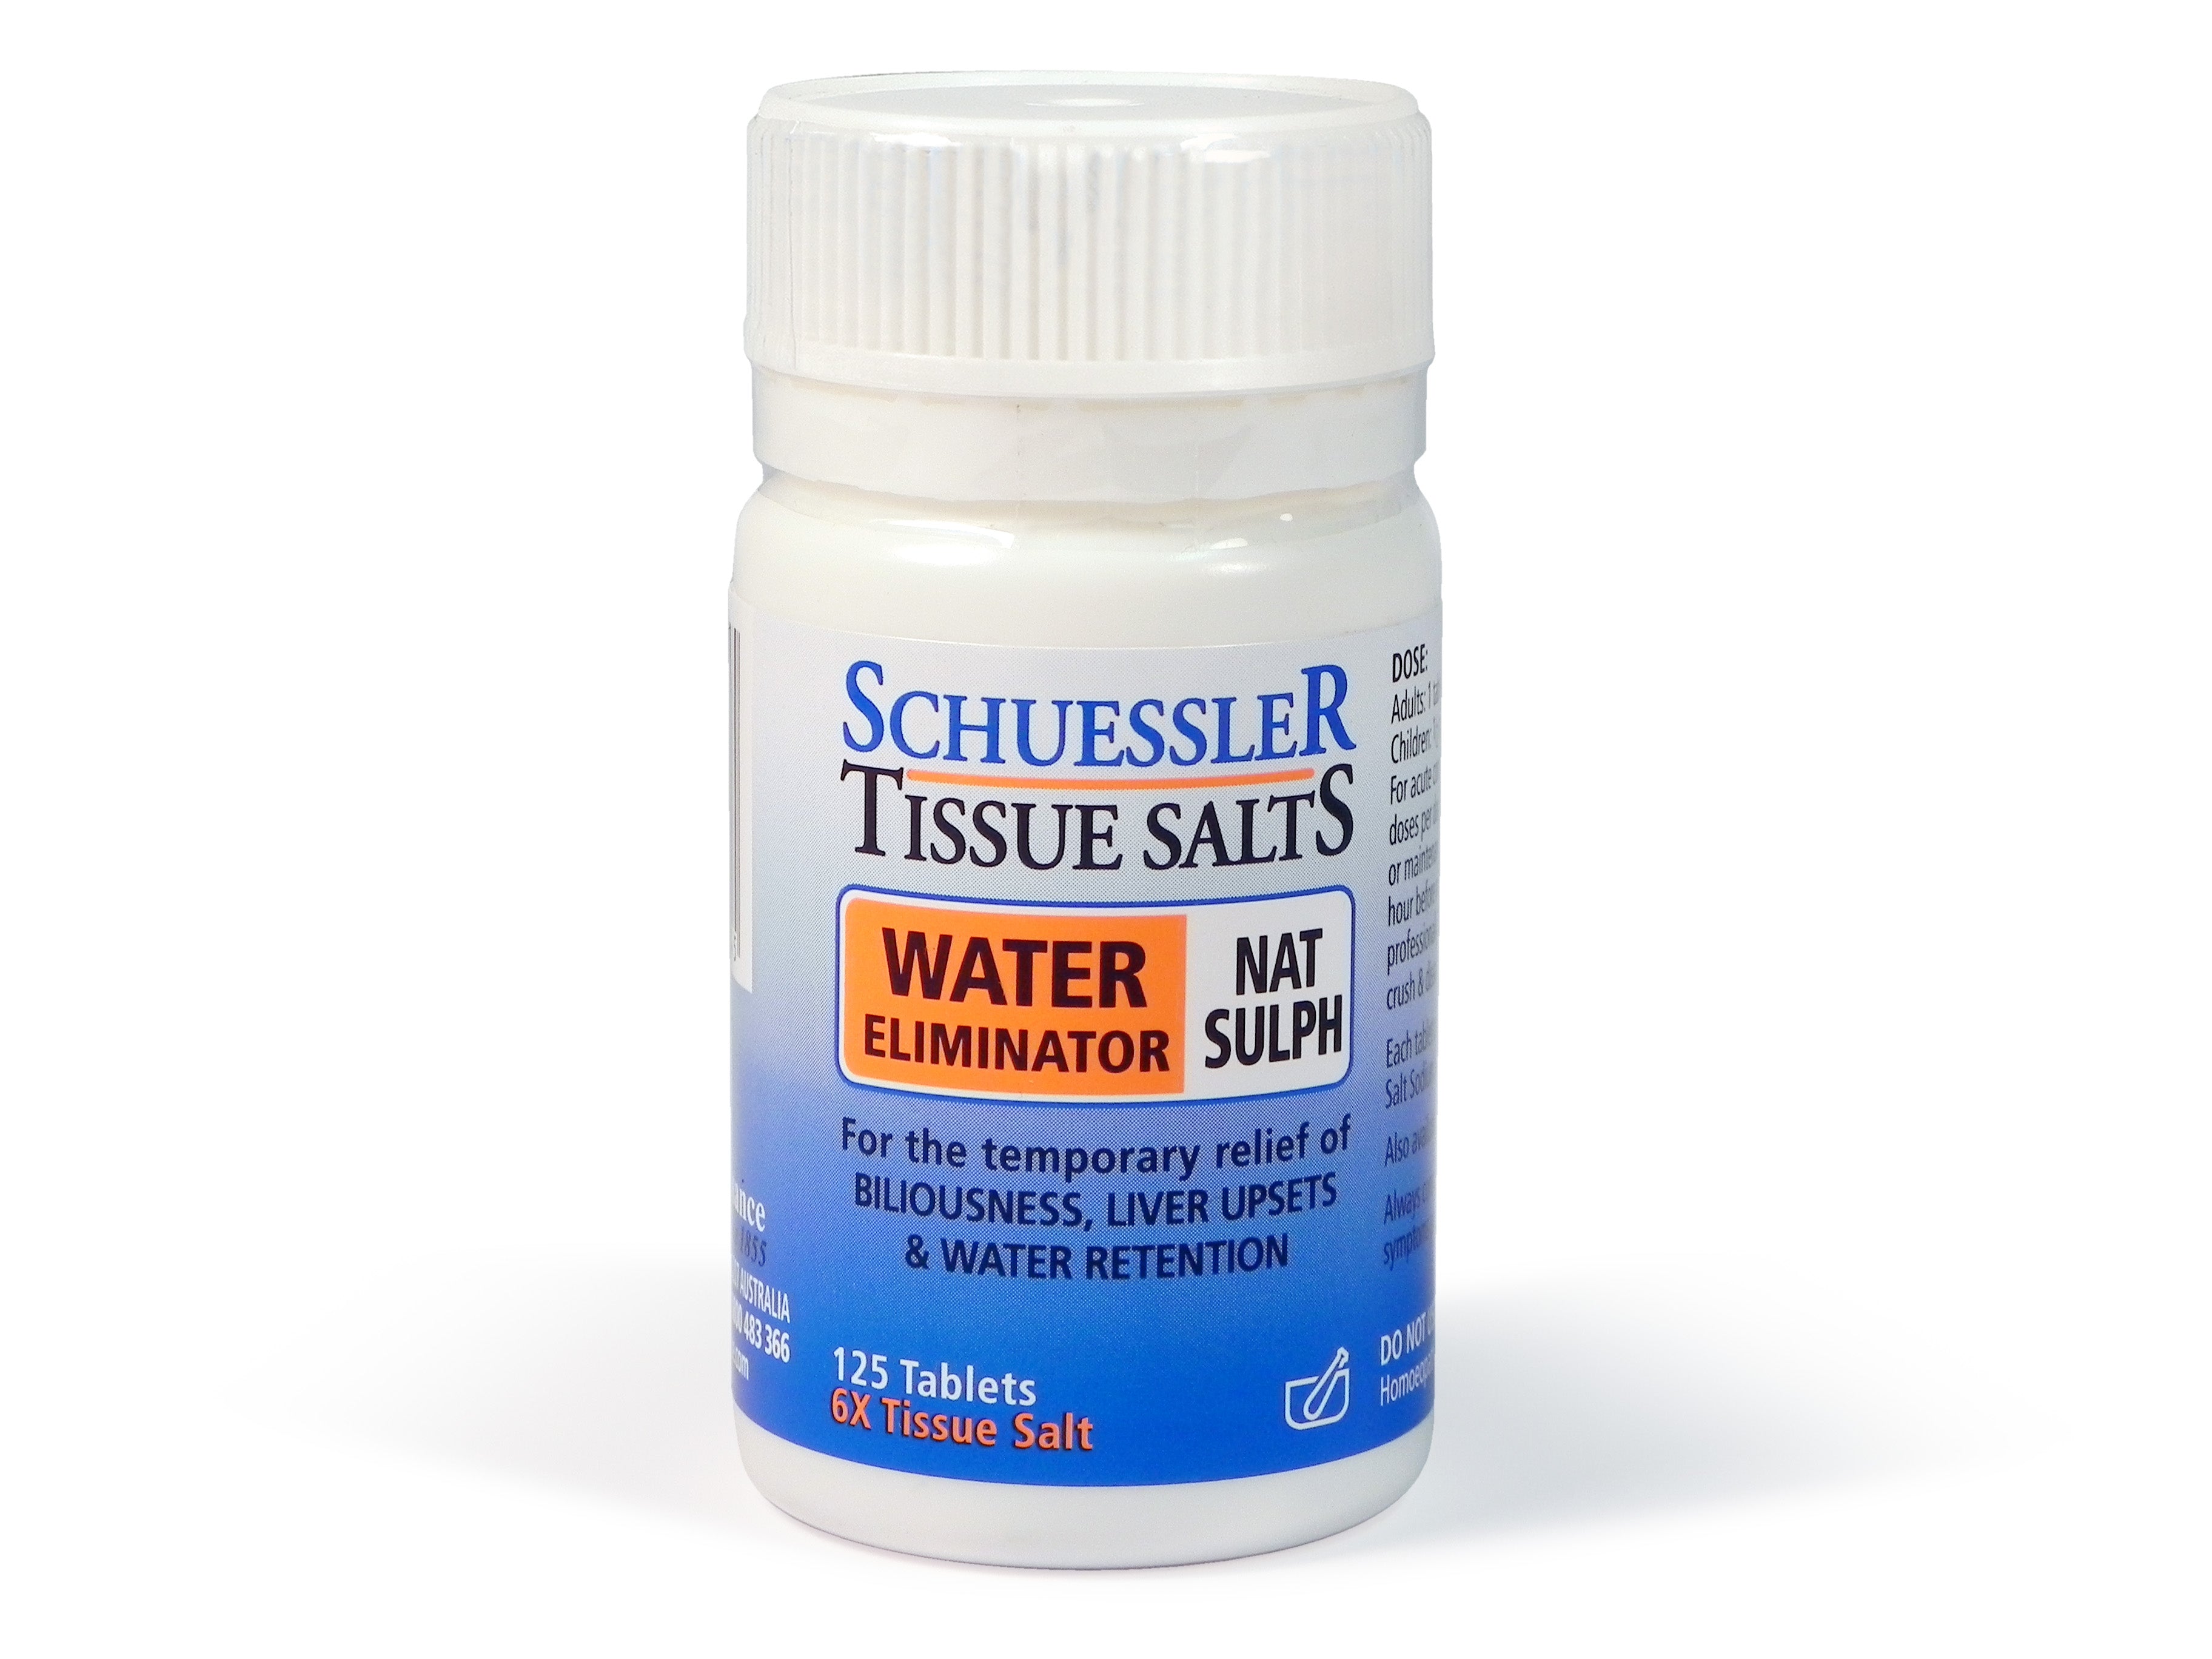 Schuessler Tissue Salts - Nat Sulph